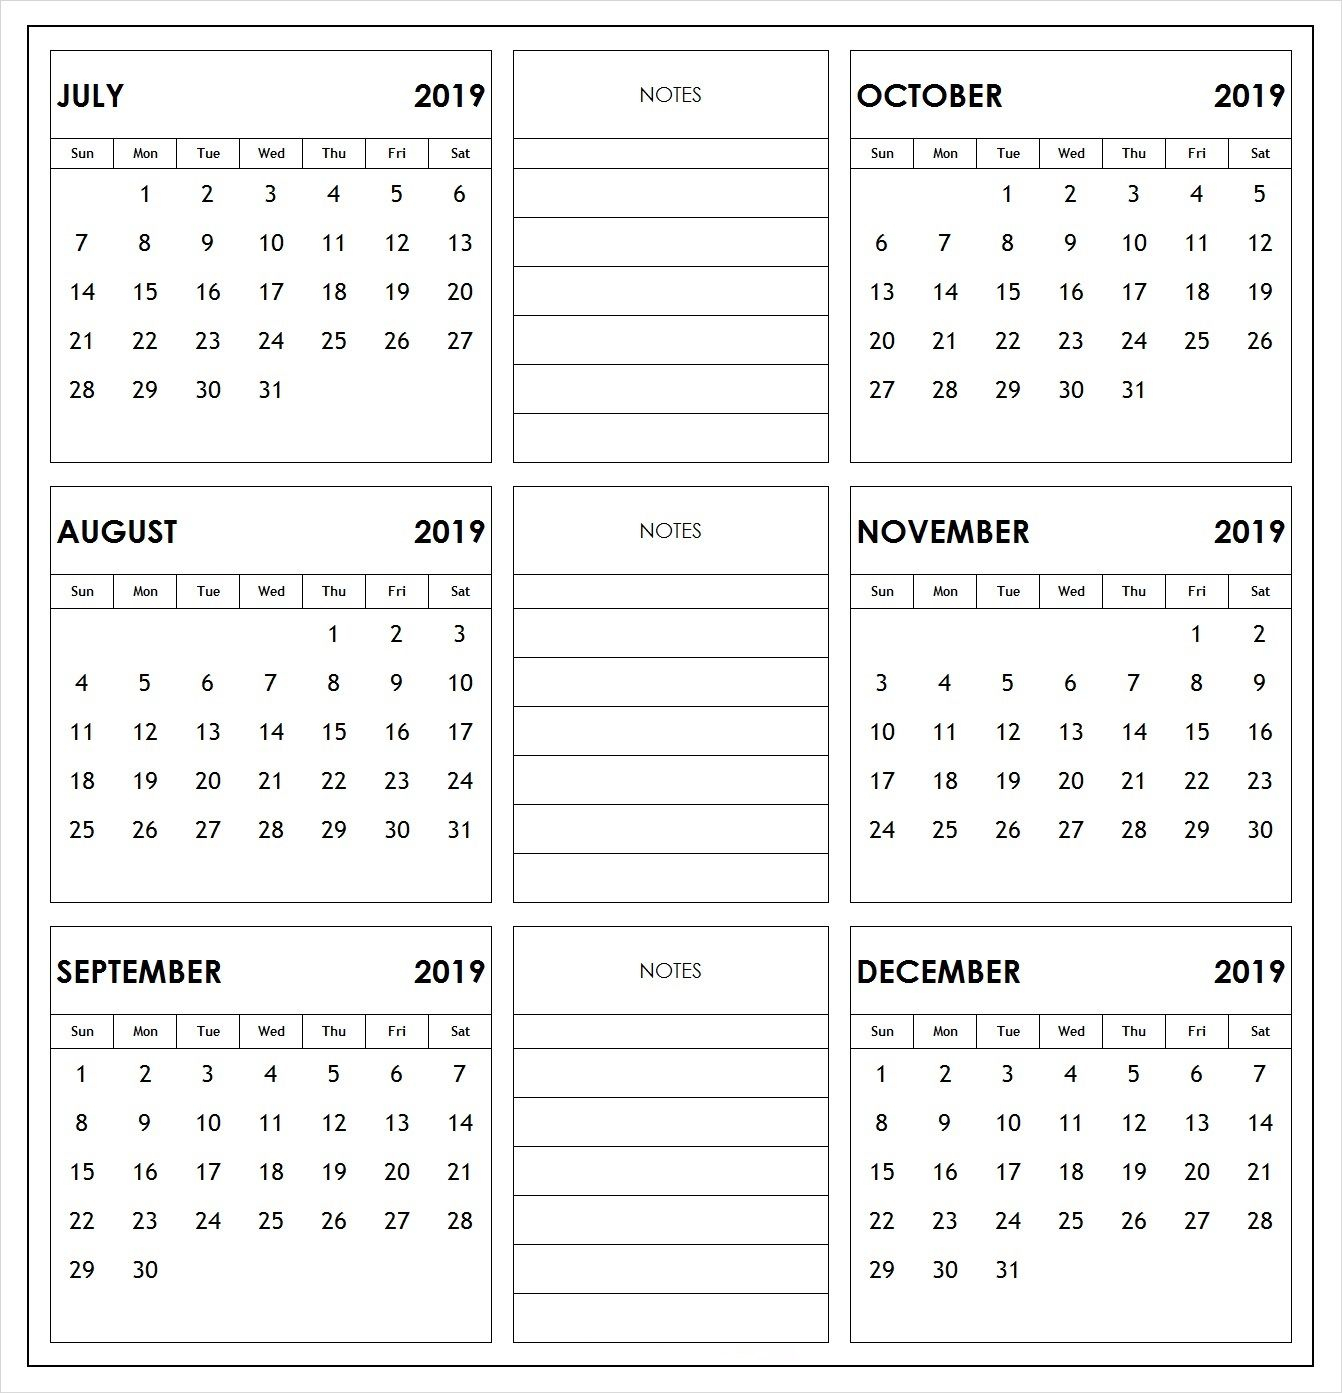 2019 Half Year Print Calendar | 2019 Calendars In 2019